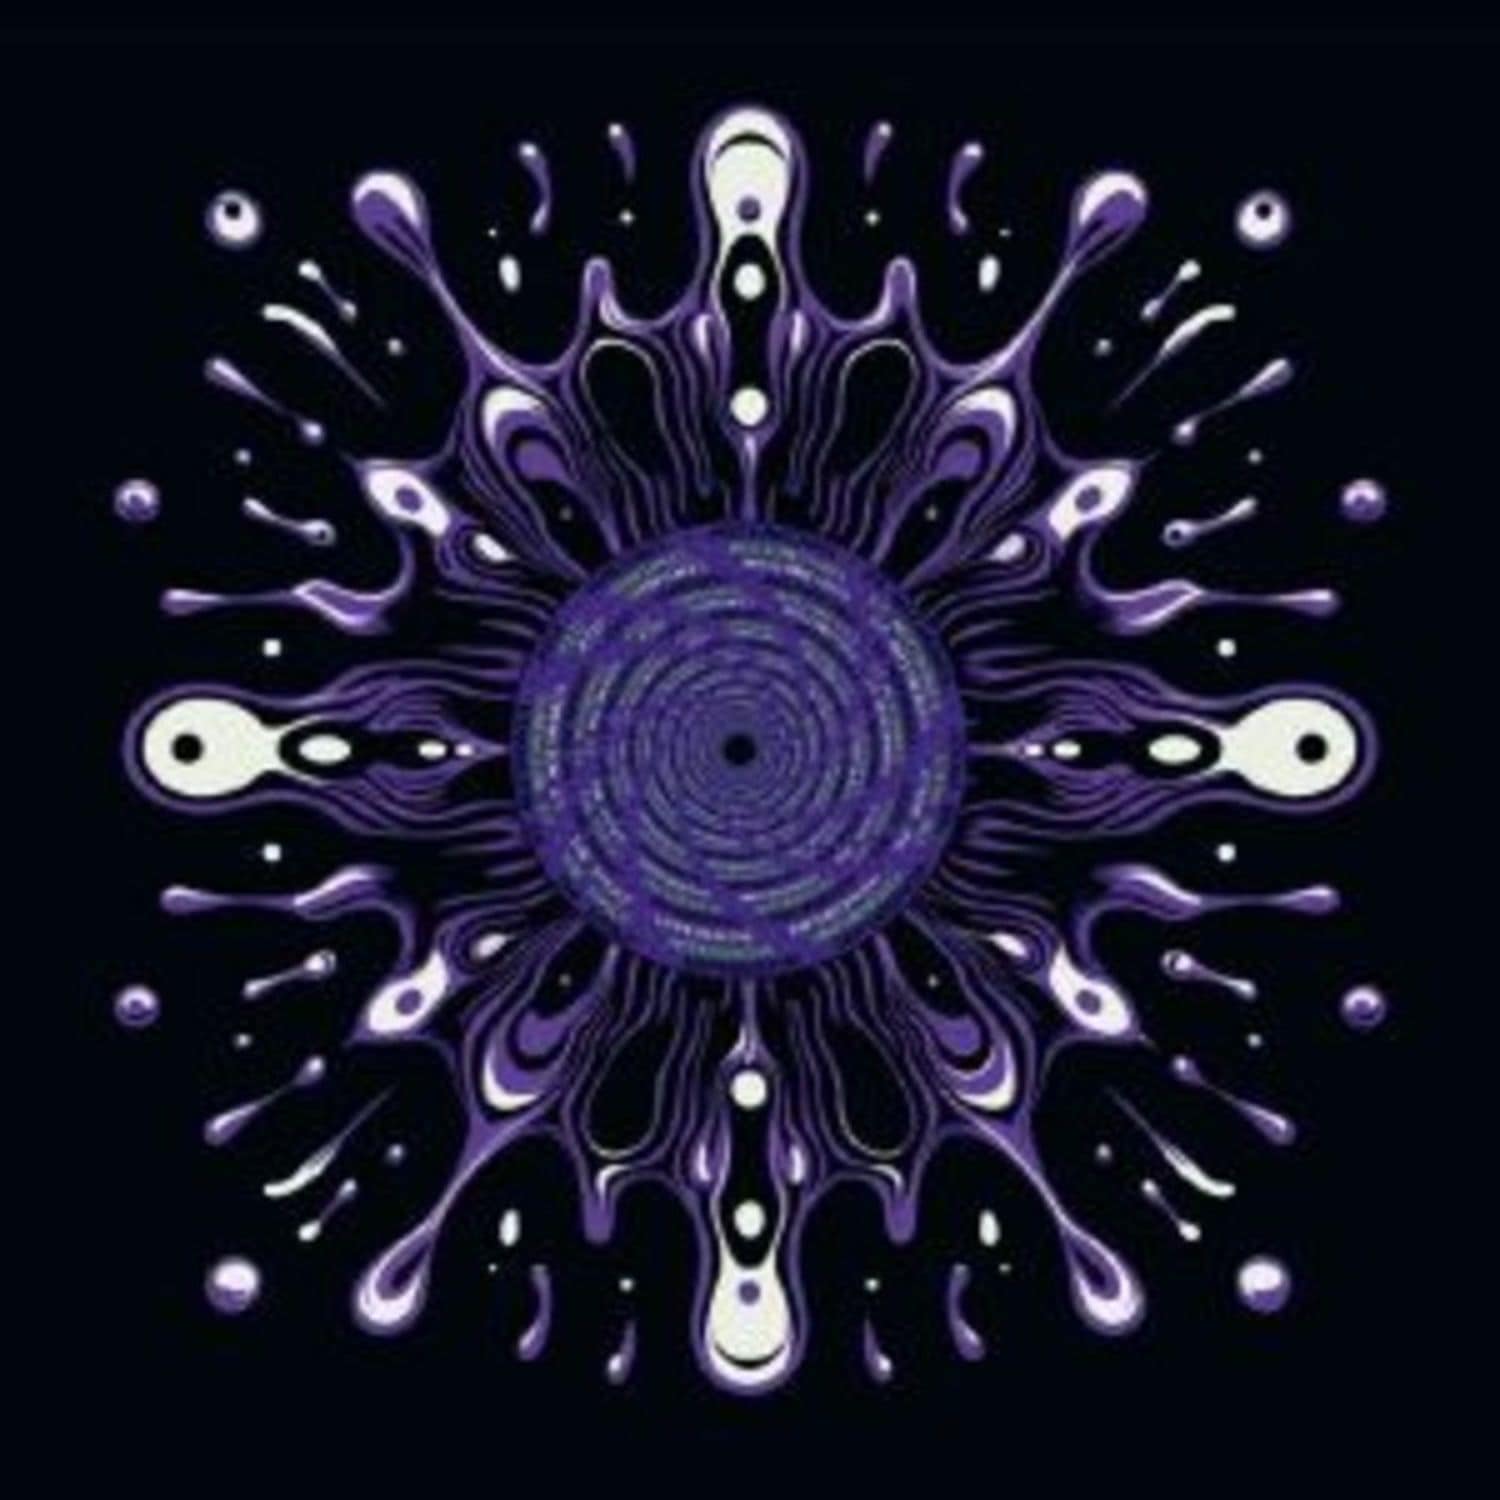 Anthrophia / Dimension 23 / Centuras - RAVE REVIVAL EP